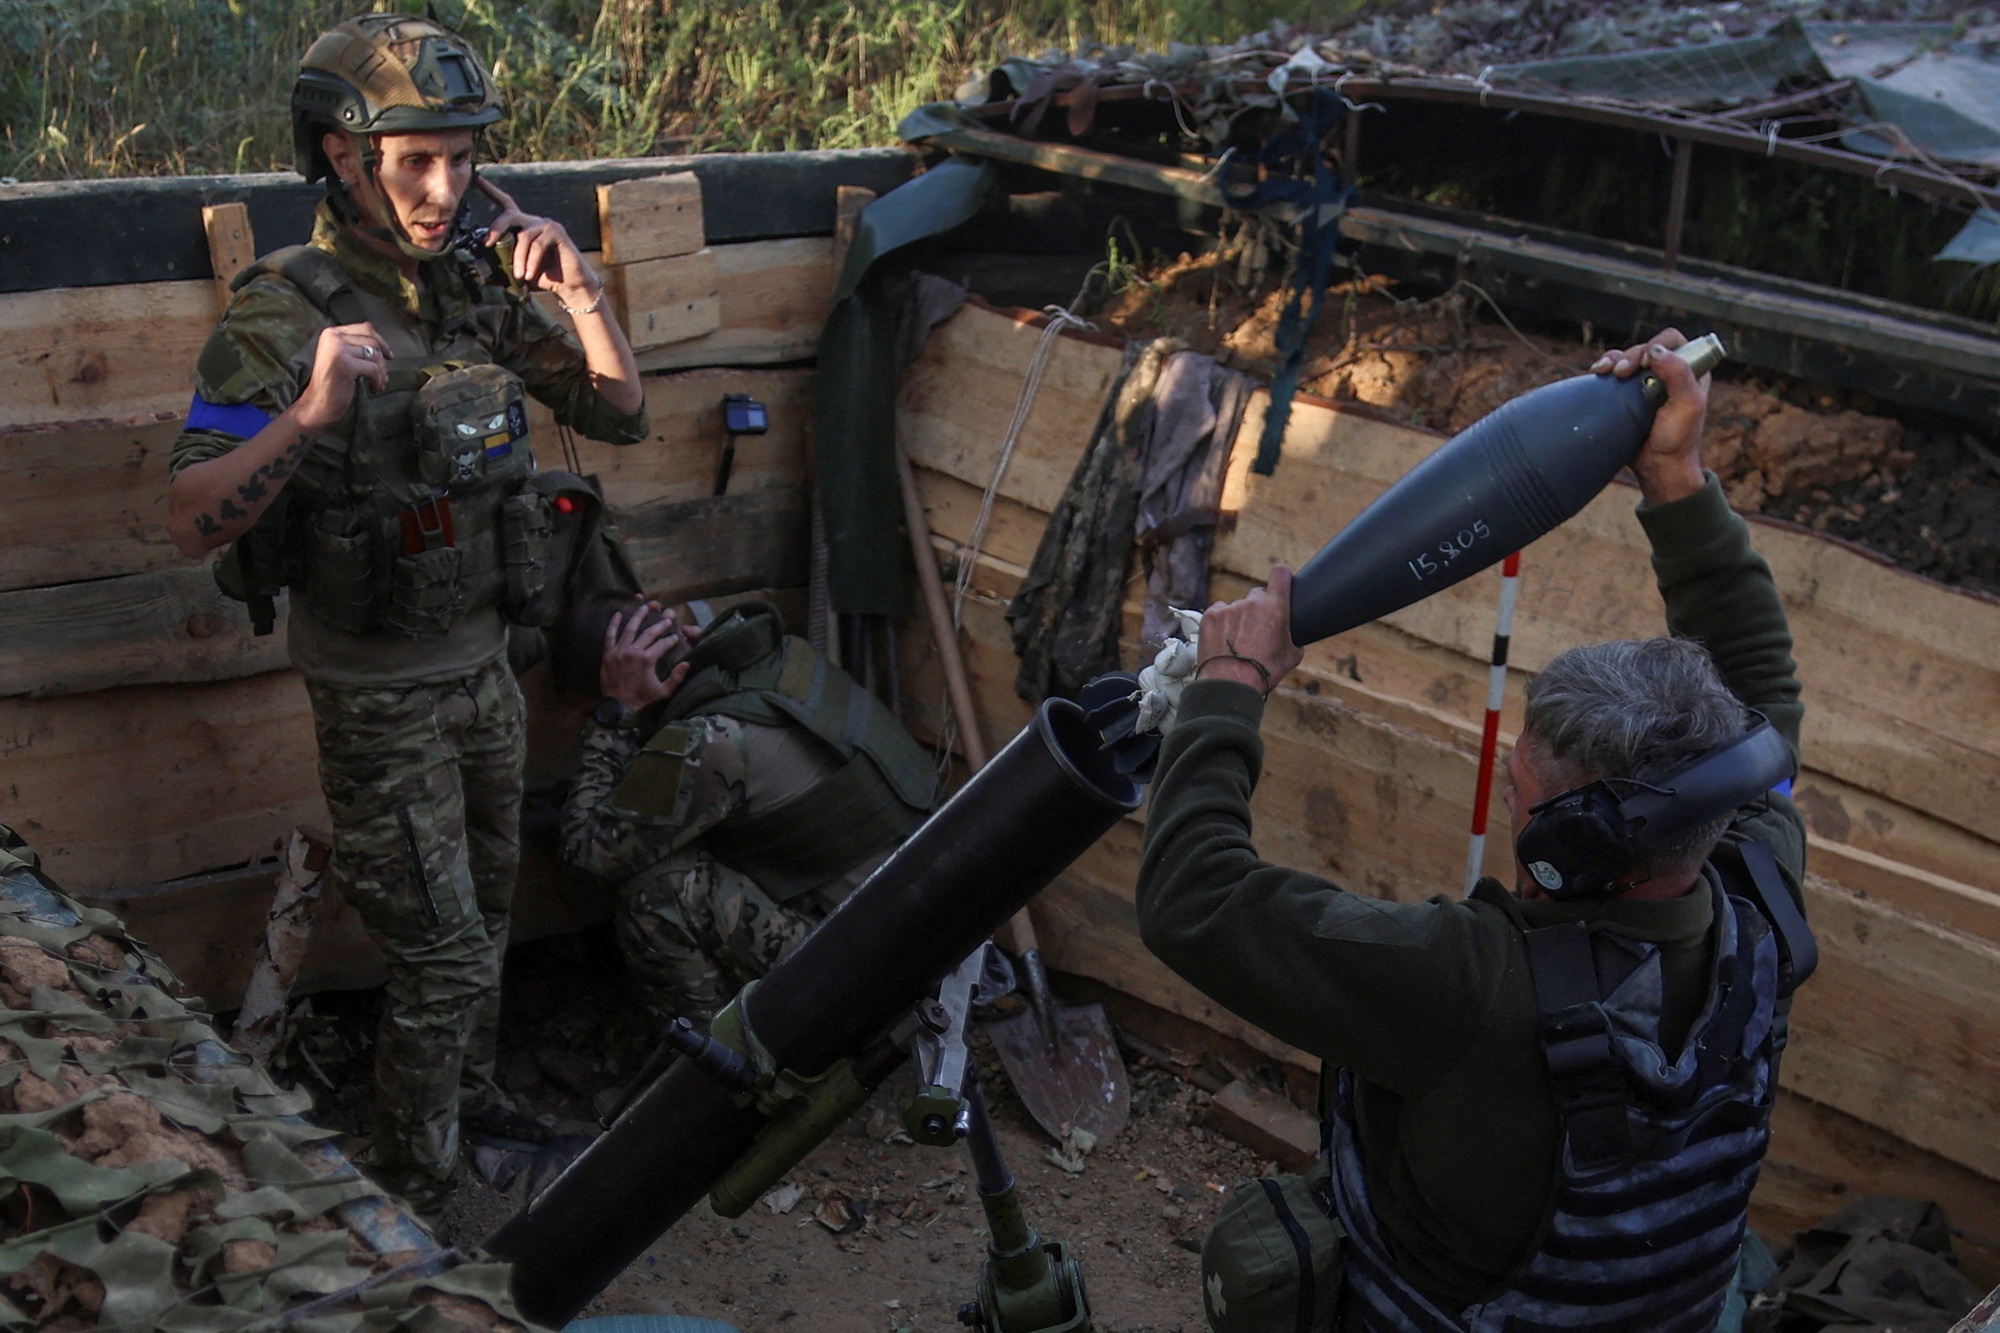 Binh lính Ukraine: giao tranh ở miền nam Zaporizhzhia khốc liệt hơn - Ảnh 1.